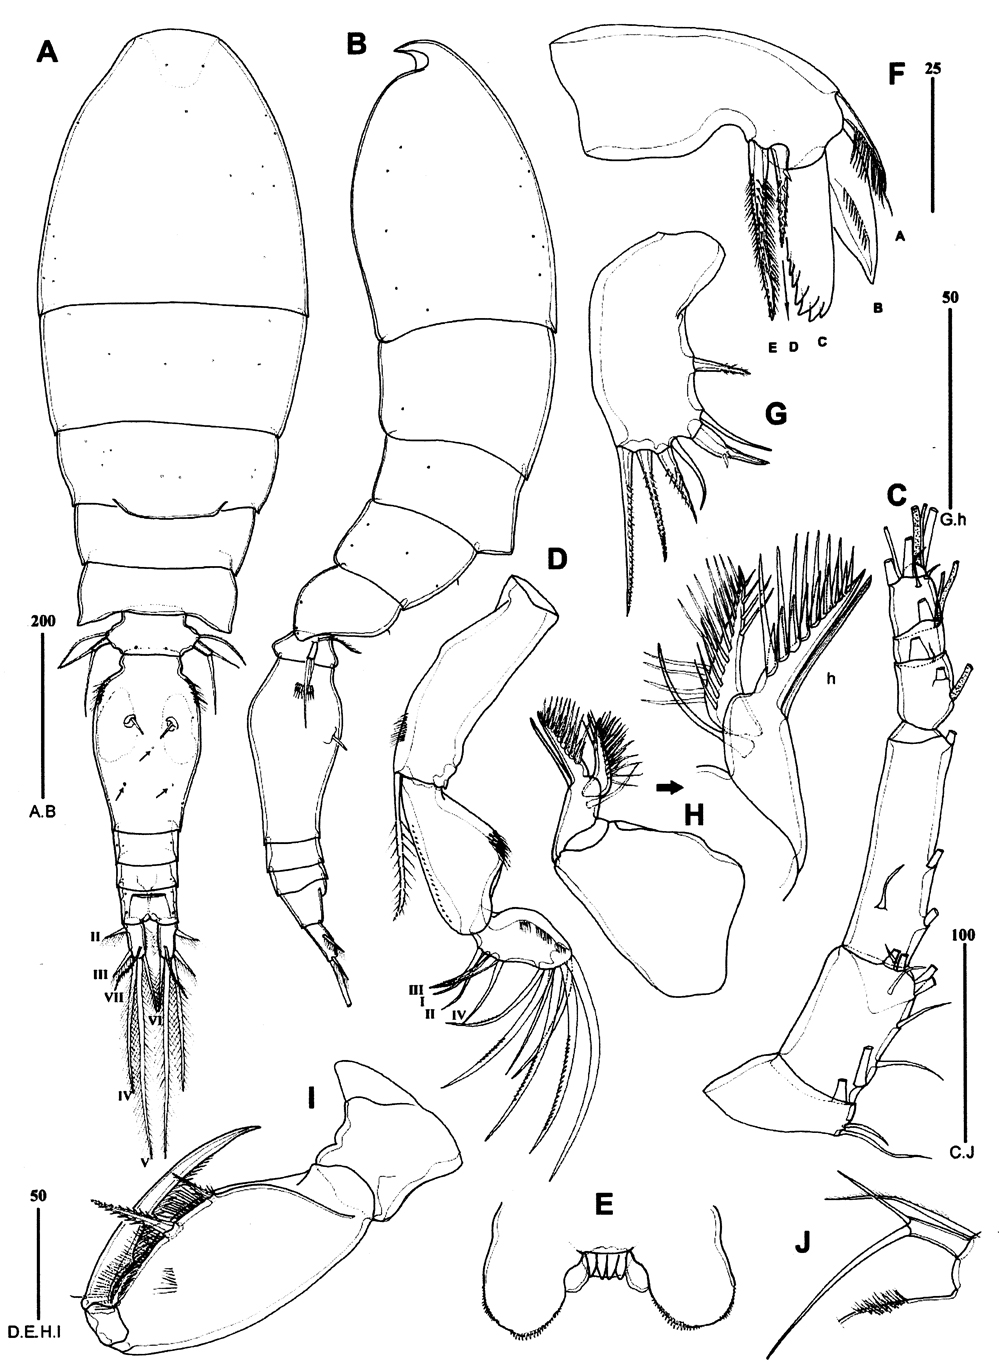 Species Triconia hirsuta - Plate 1 of morphological figures